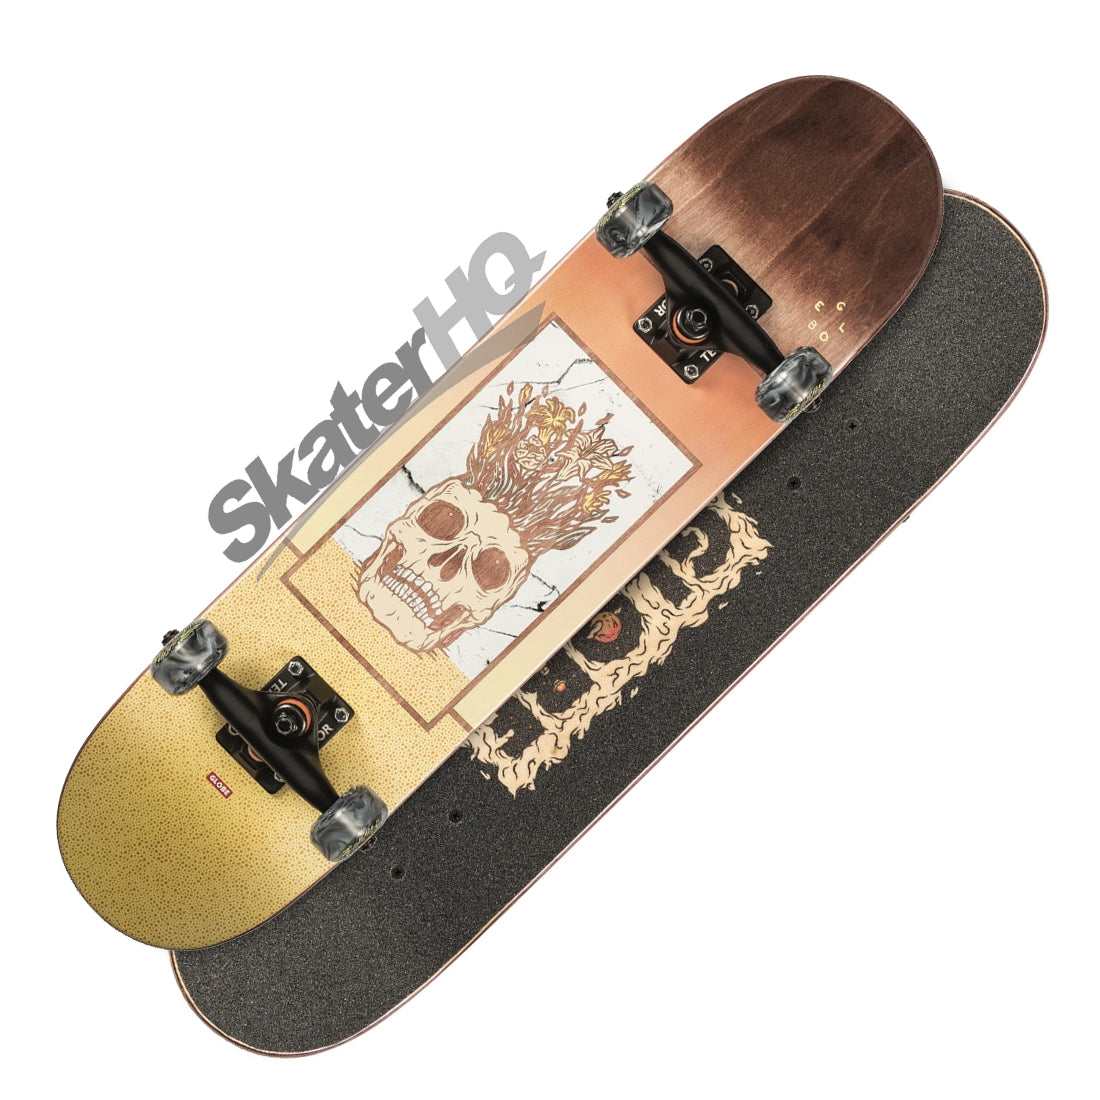 Globe Celestial Growth Mini 7.0 Complete - Brown Skateboard Completes Modern Street